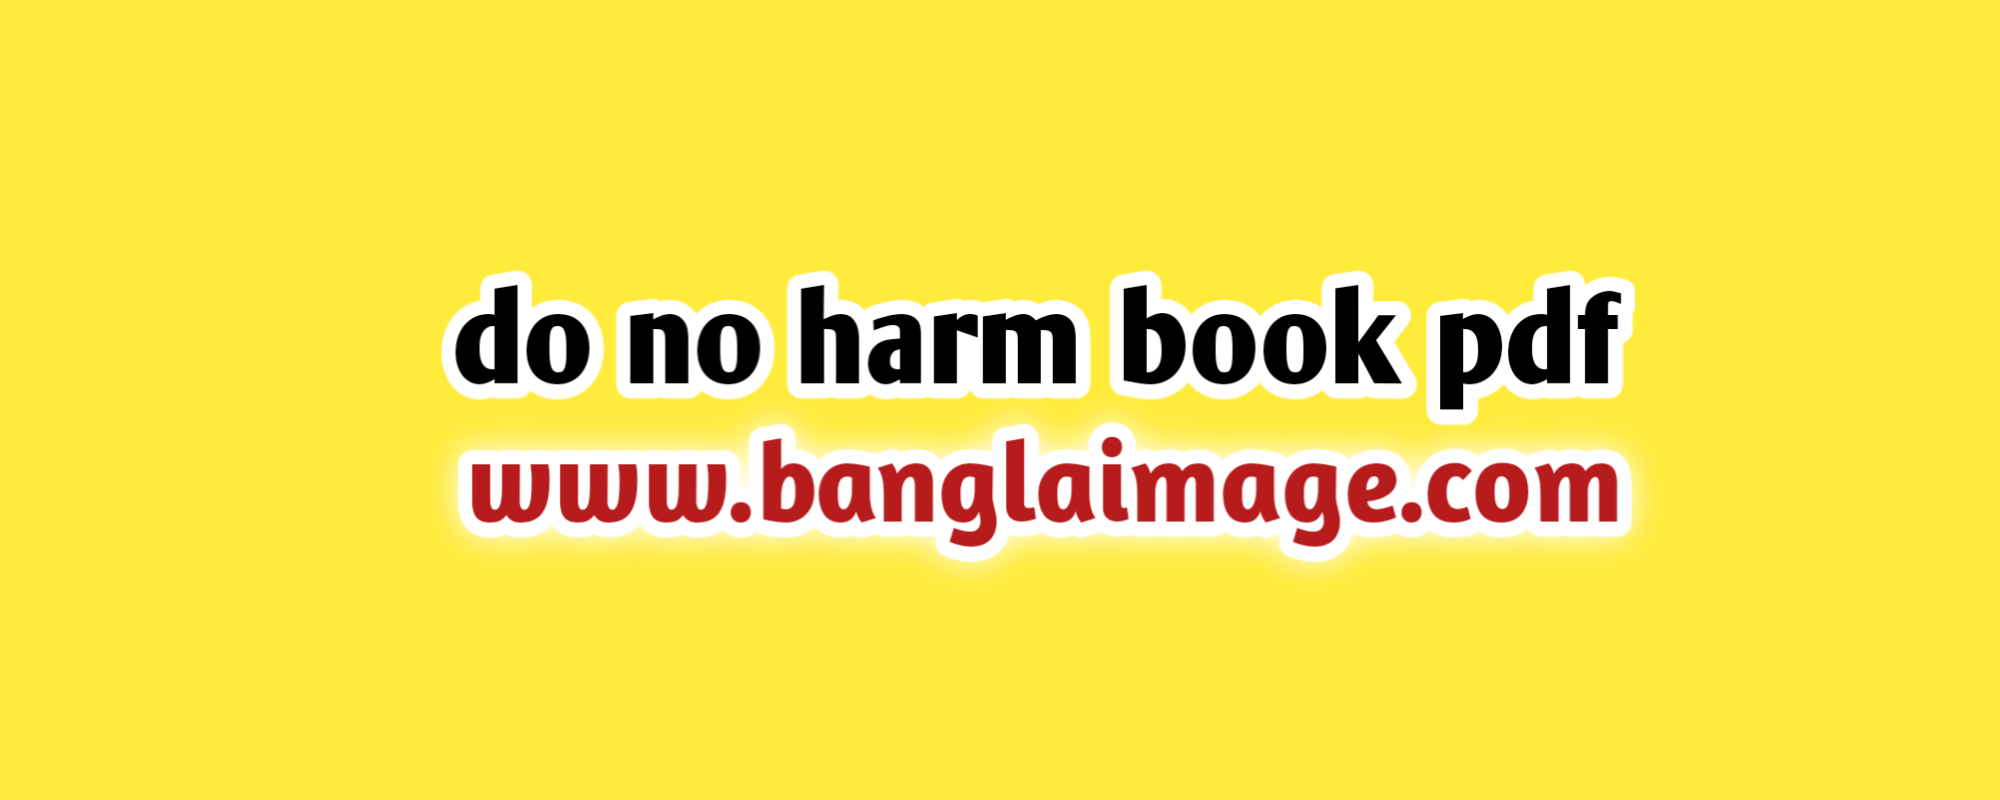 do no harm book pdf, do no harm book pdf drive file, do no harm book pdf now, the do no harm book pdf drive file